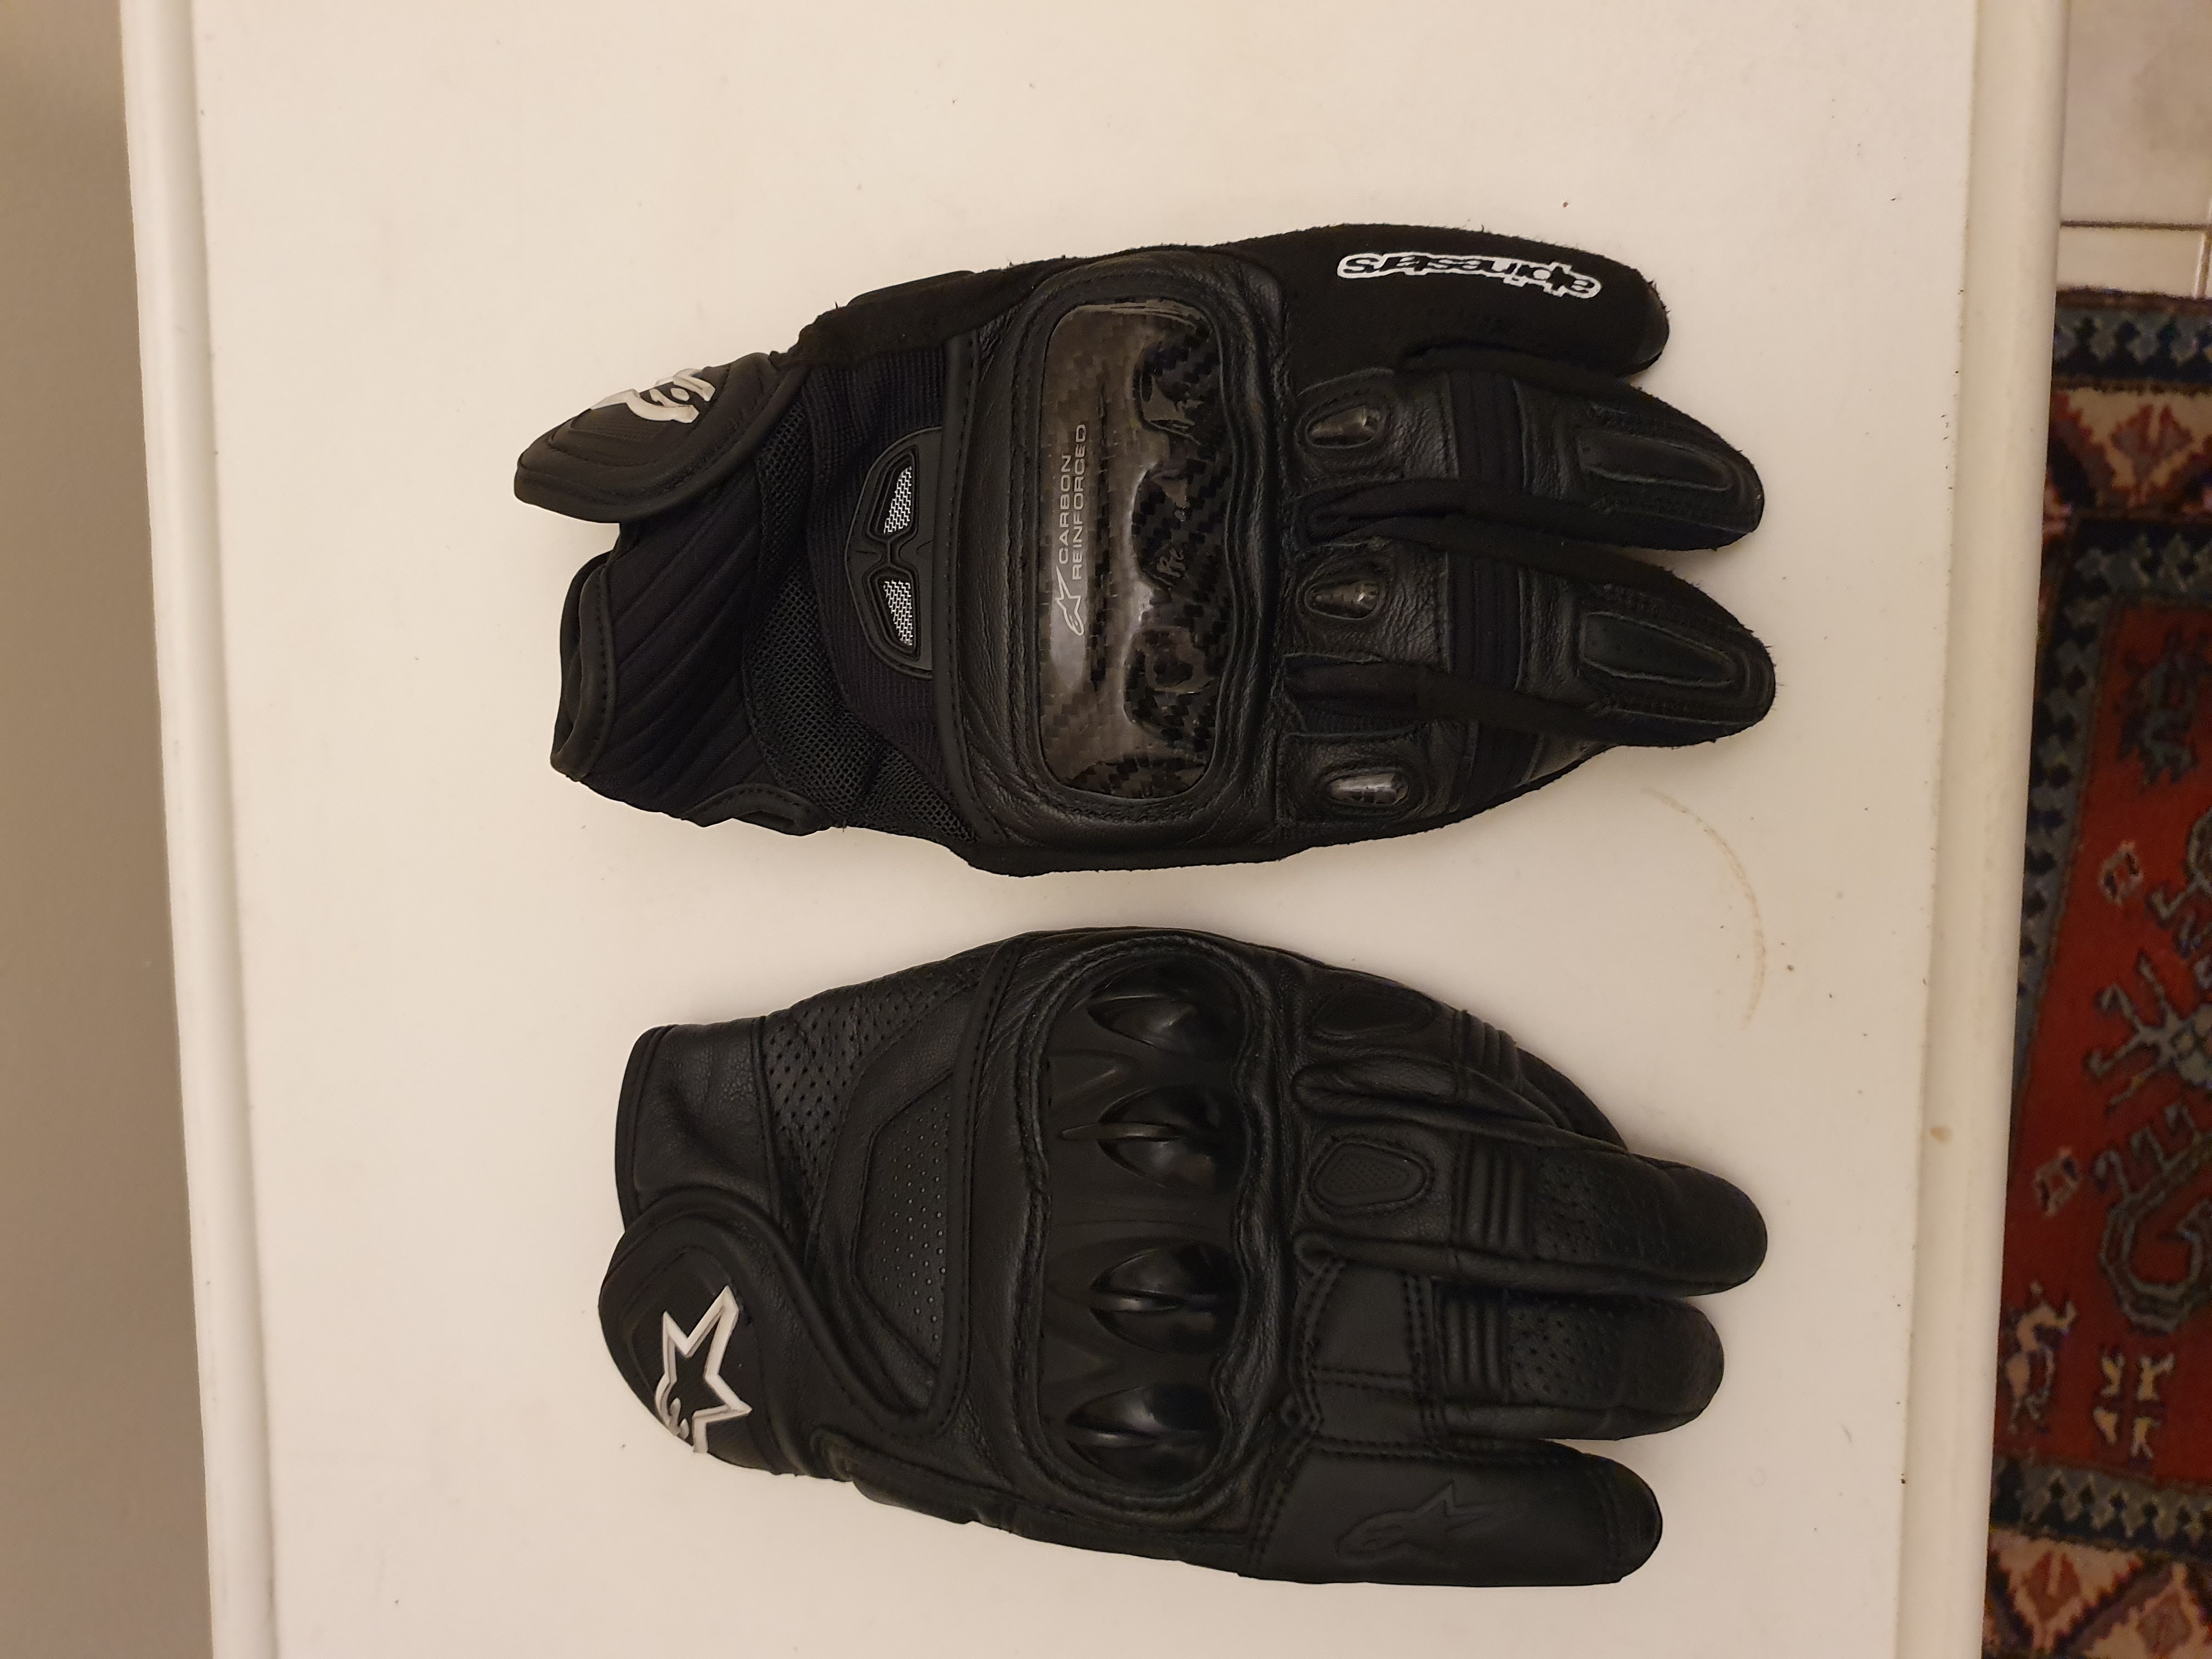  Gloves - Alpinestars